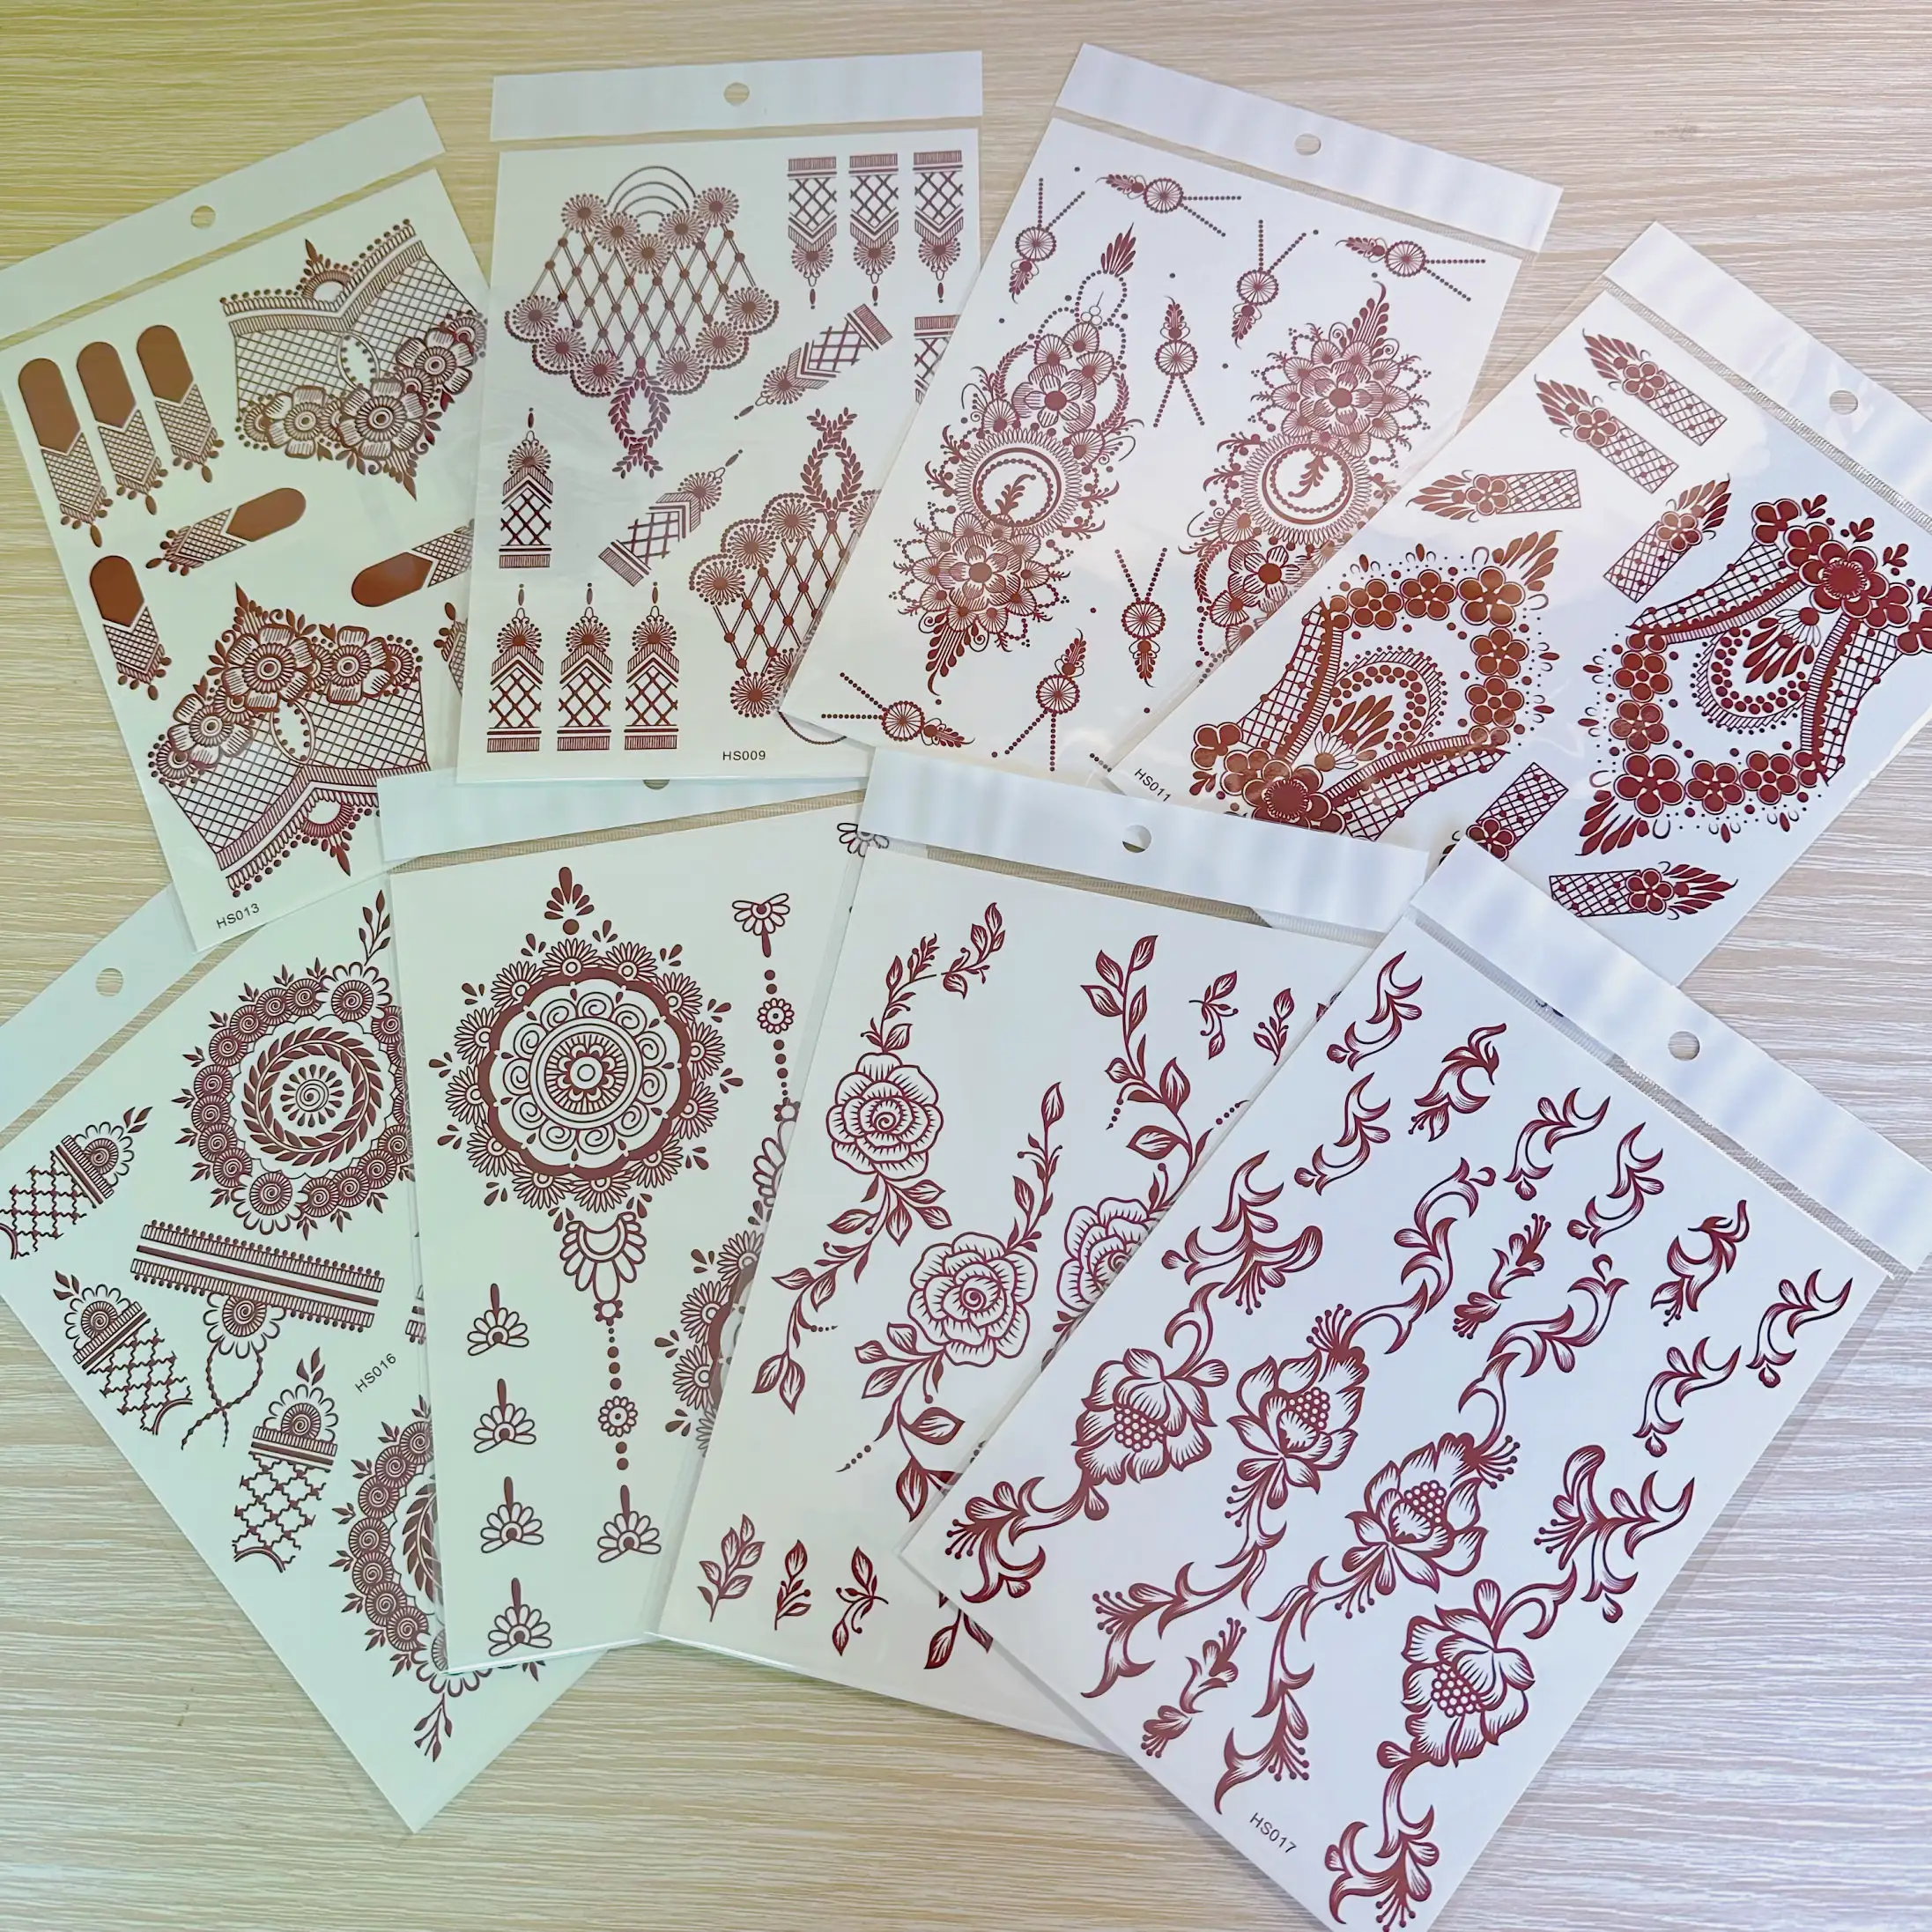 Venta caliente Henna Art Tatoo Sticker Granate Ambas manos Mehndi Diseño Impermeable Tatuaje temporal